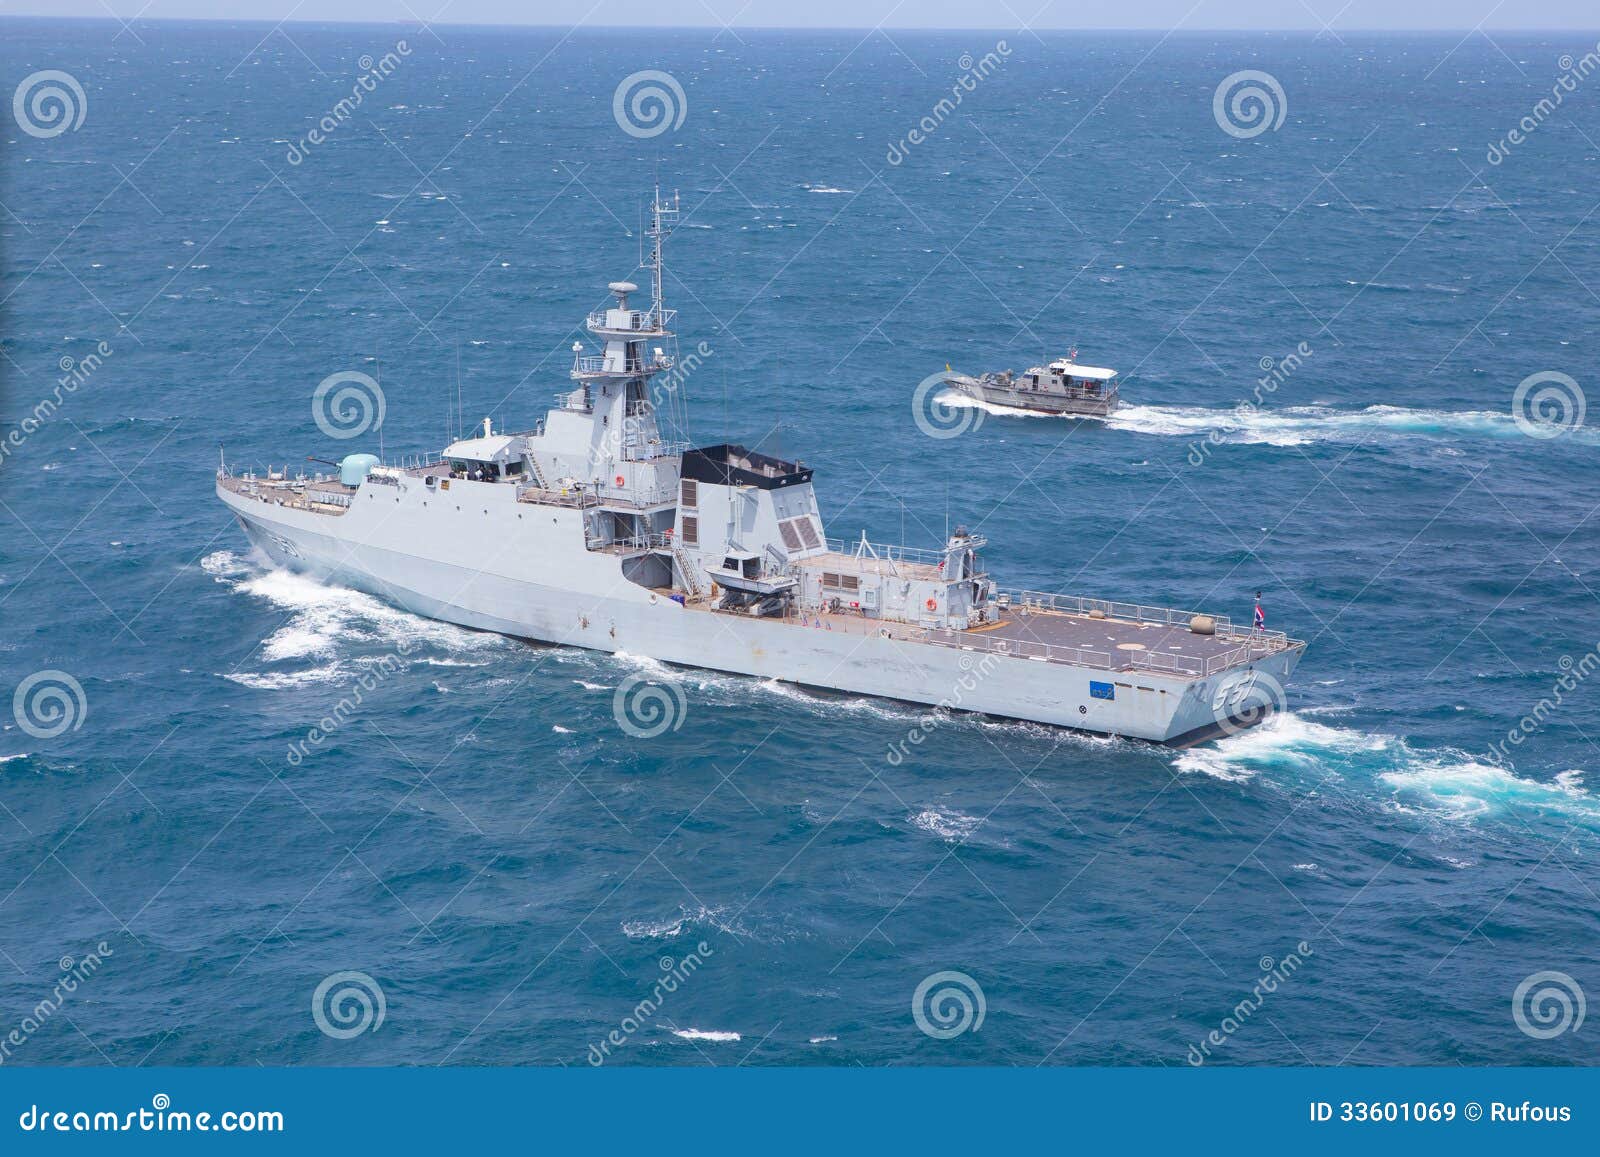 sattaheep-thailand-june-h-t-m-s-krabi-offshore-patro-patrol-vessel-royal-thai-navy-test-control-system-speed-test-33601069.jpg